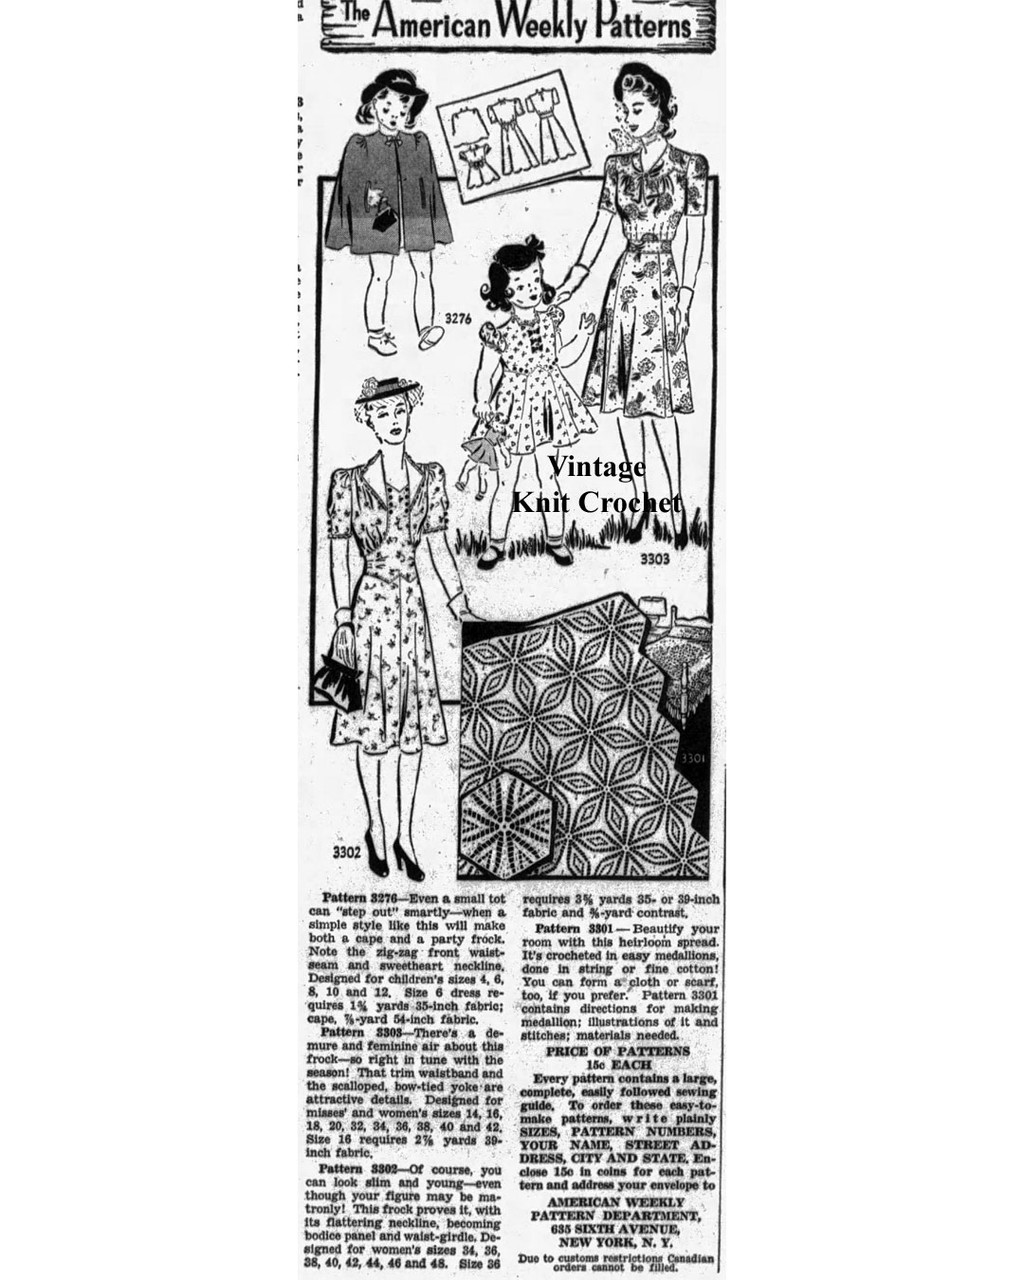 Mail Order Pattern No 3301, Crochet Medallion Newspaper Advertisement 